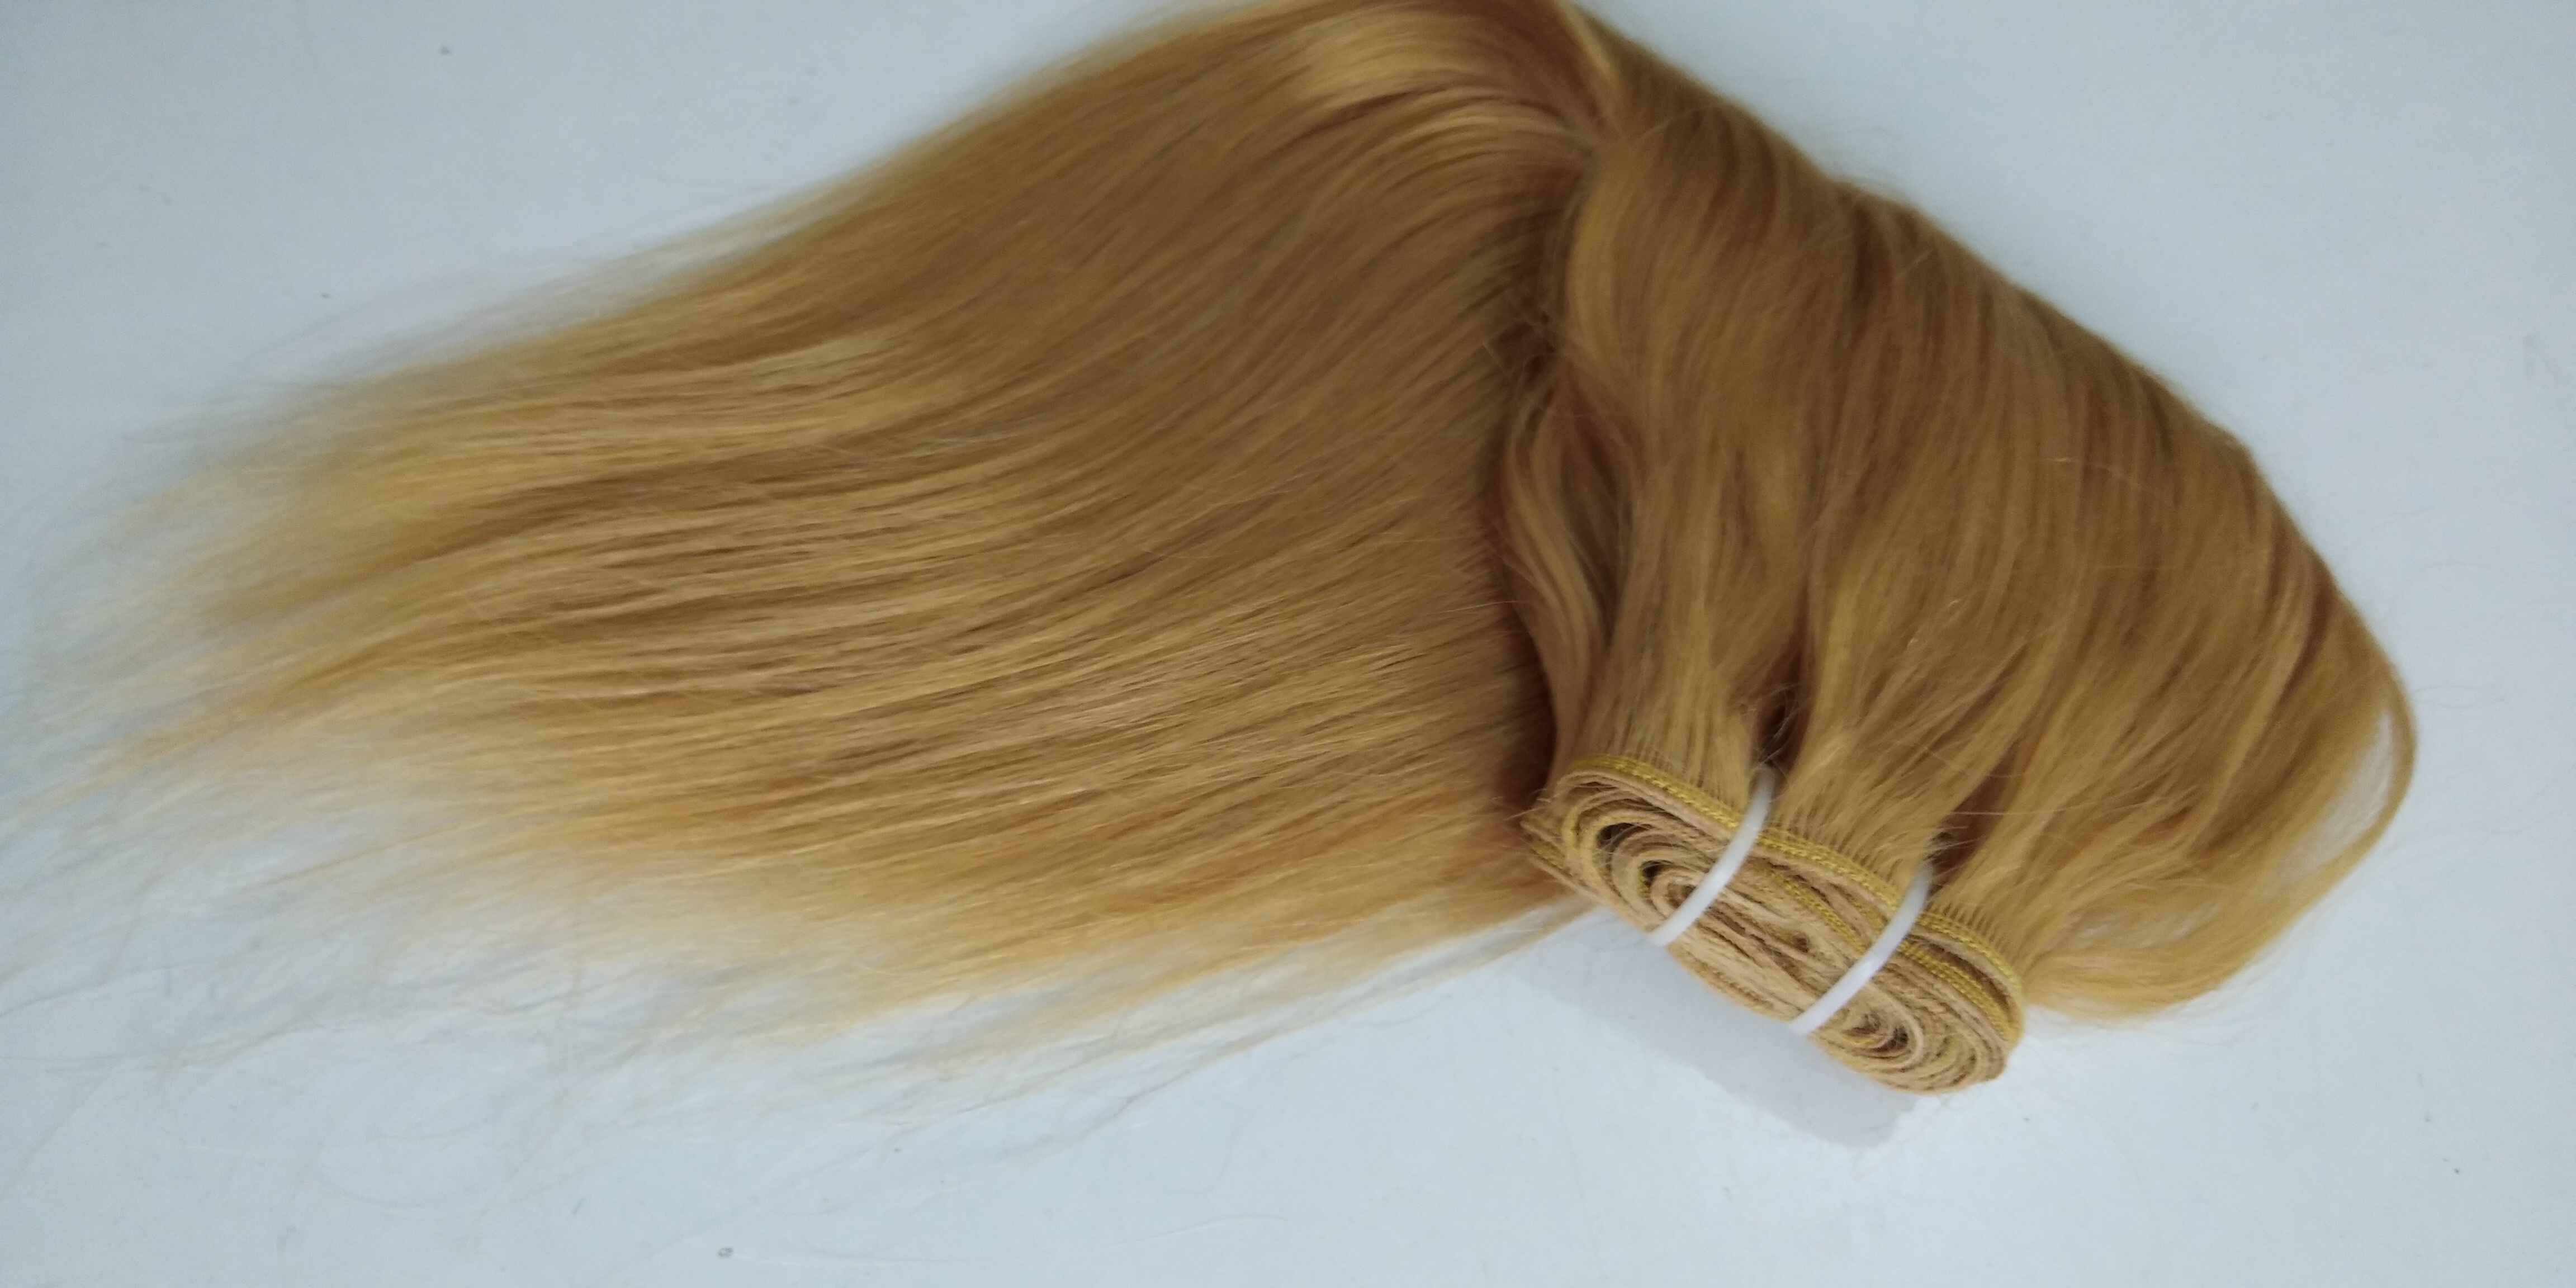 Blonde 613 Straight Blonde Human Hair